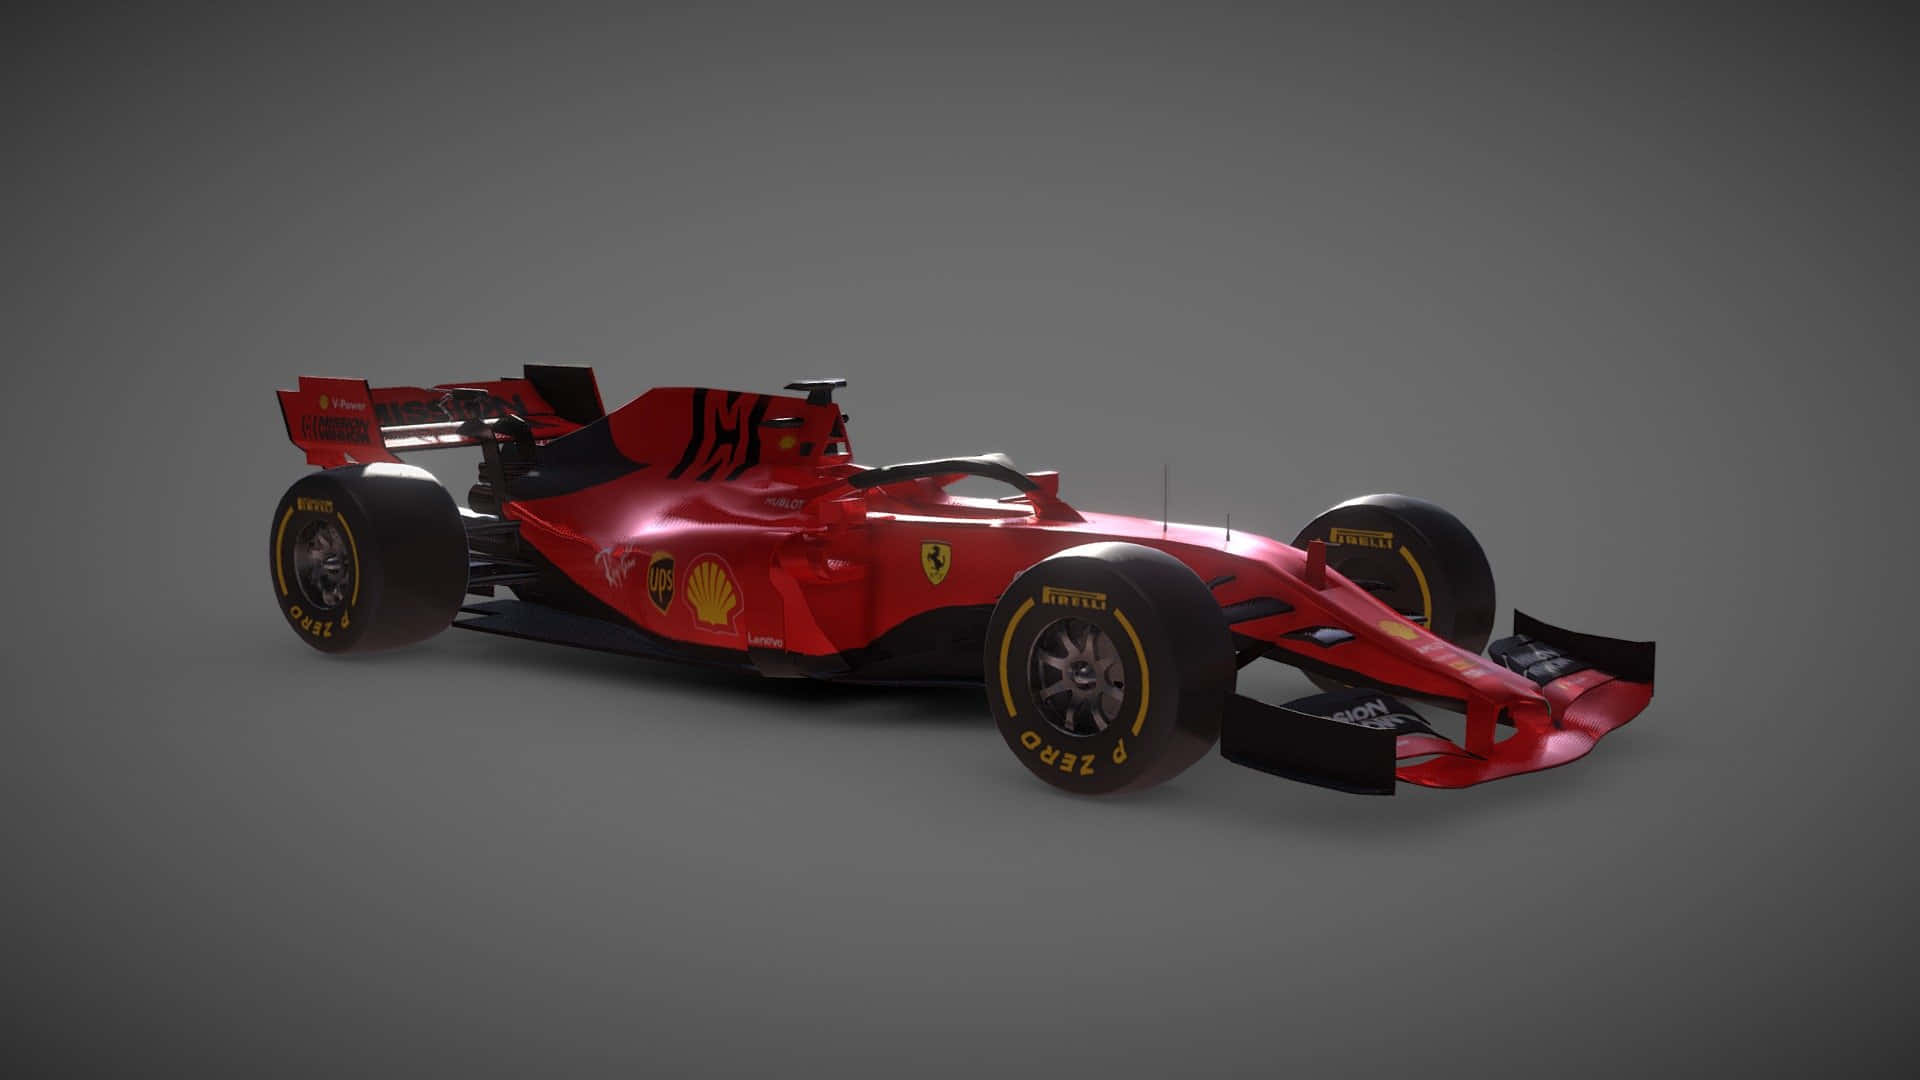 Ferrarifr1 2019 Grayscale Hd Bakgrund